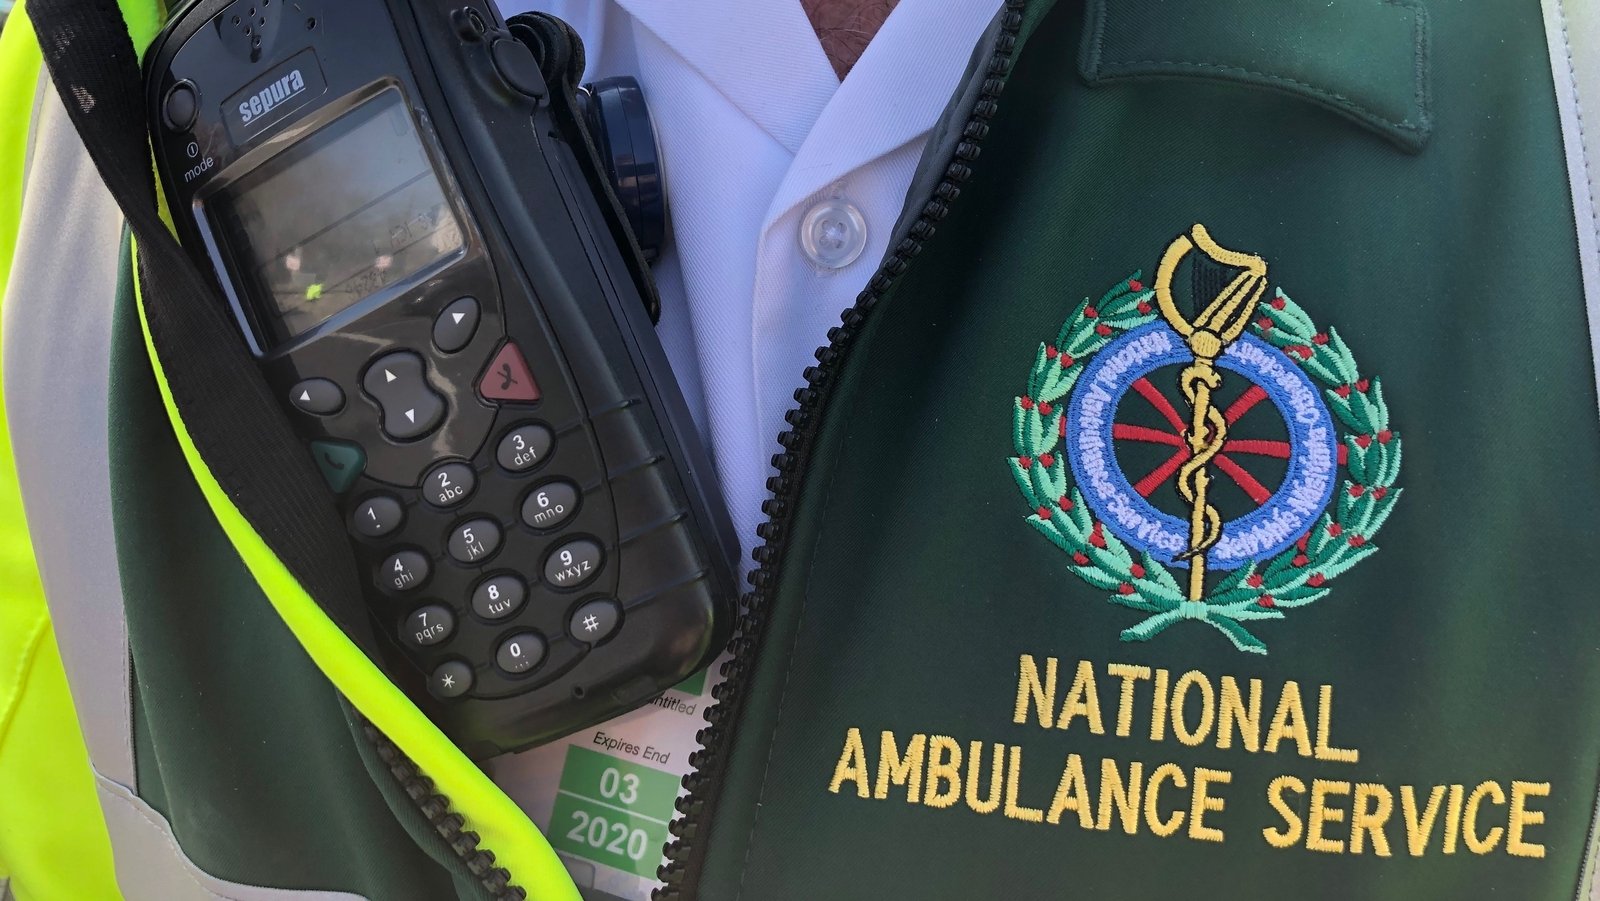 NAS paramedics to assist in Northern Ireland

